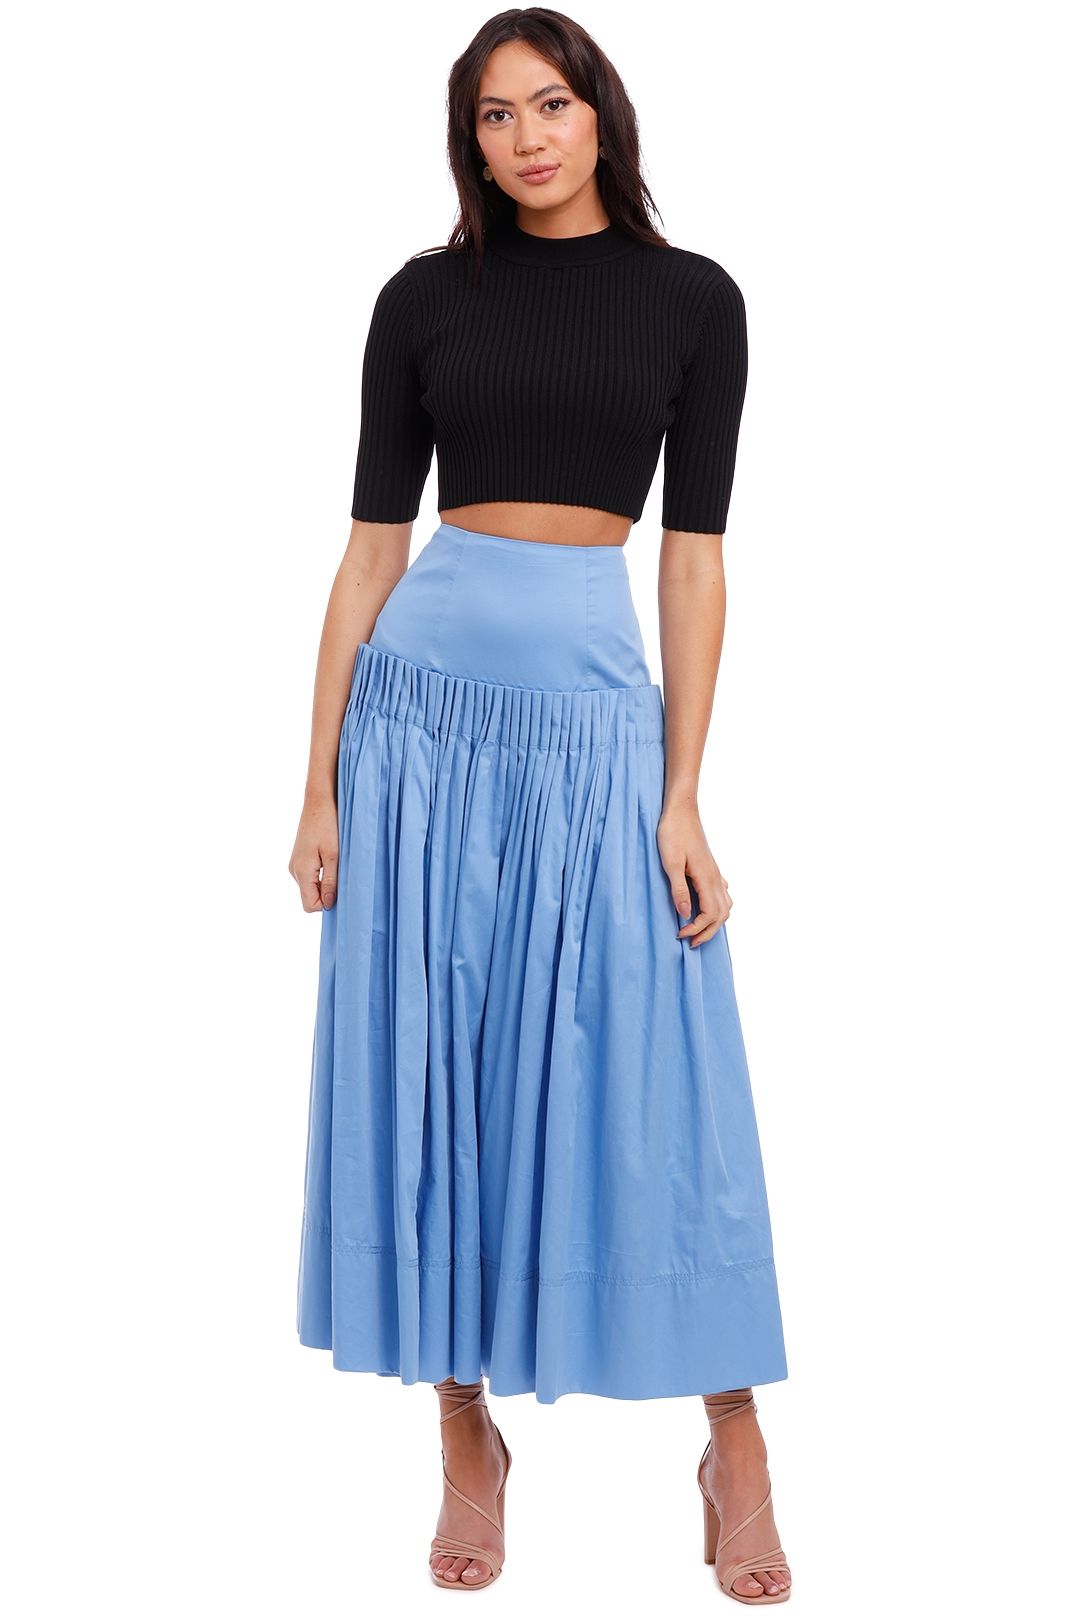 AJE Savoy Skirt blue